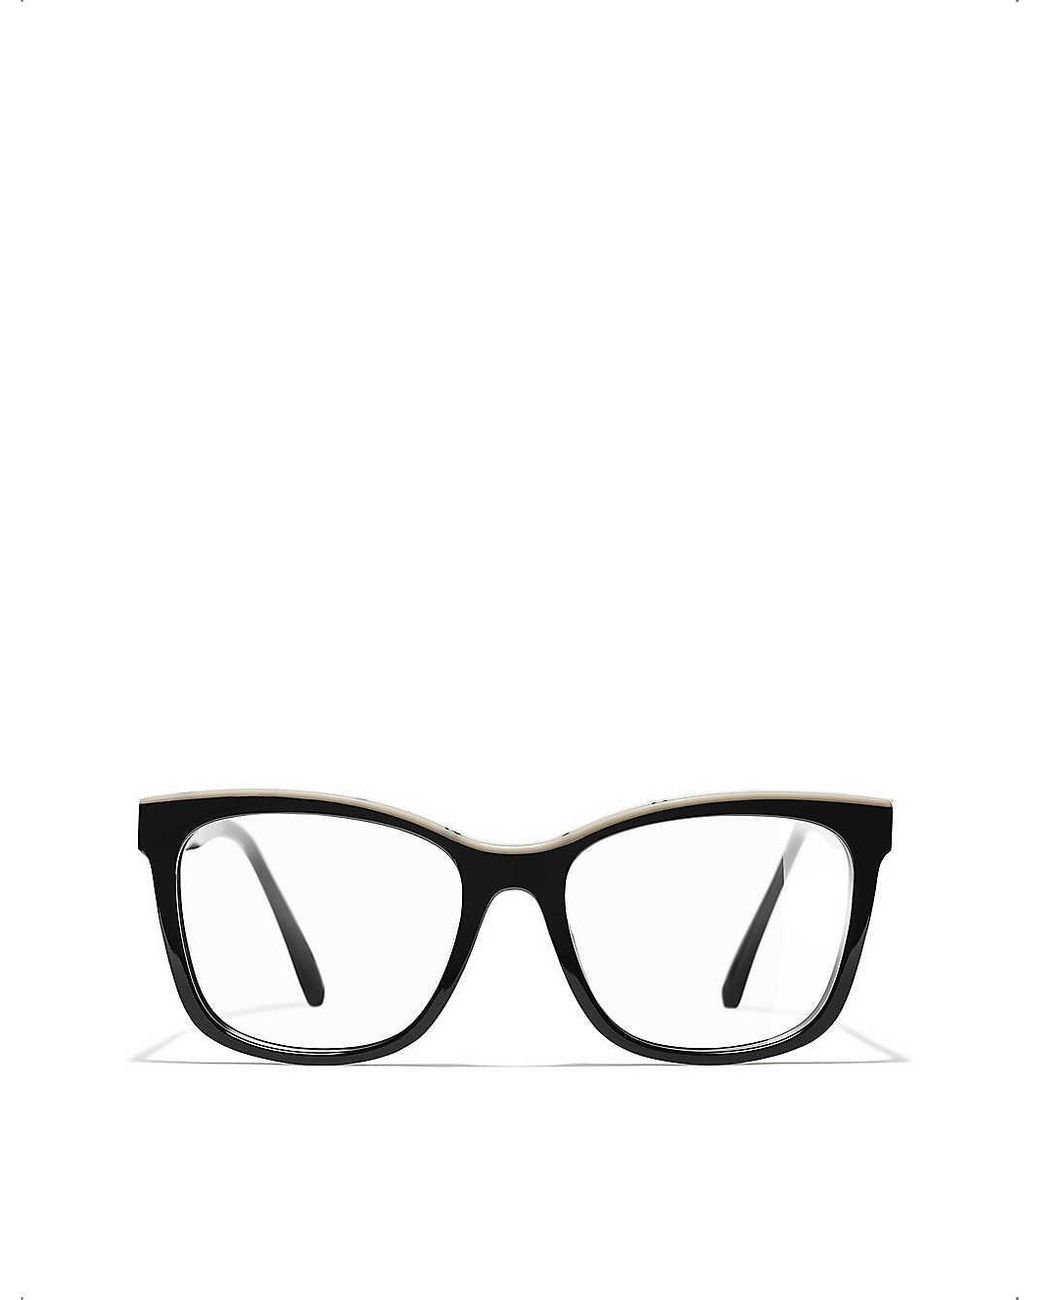 Chanel Square Eyeglasses in Black